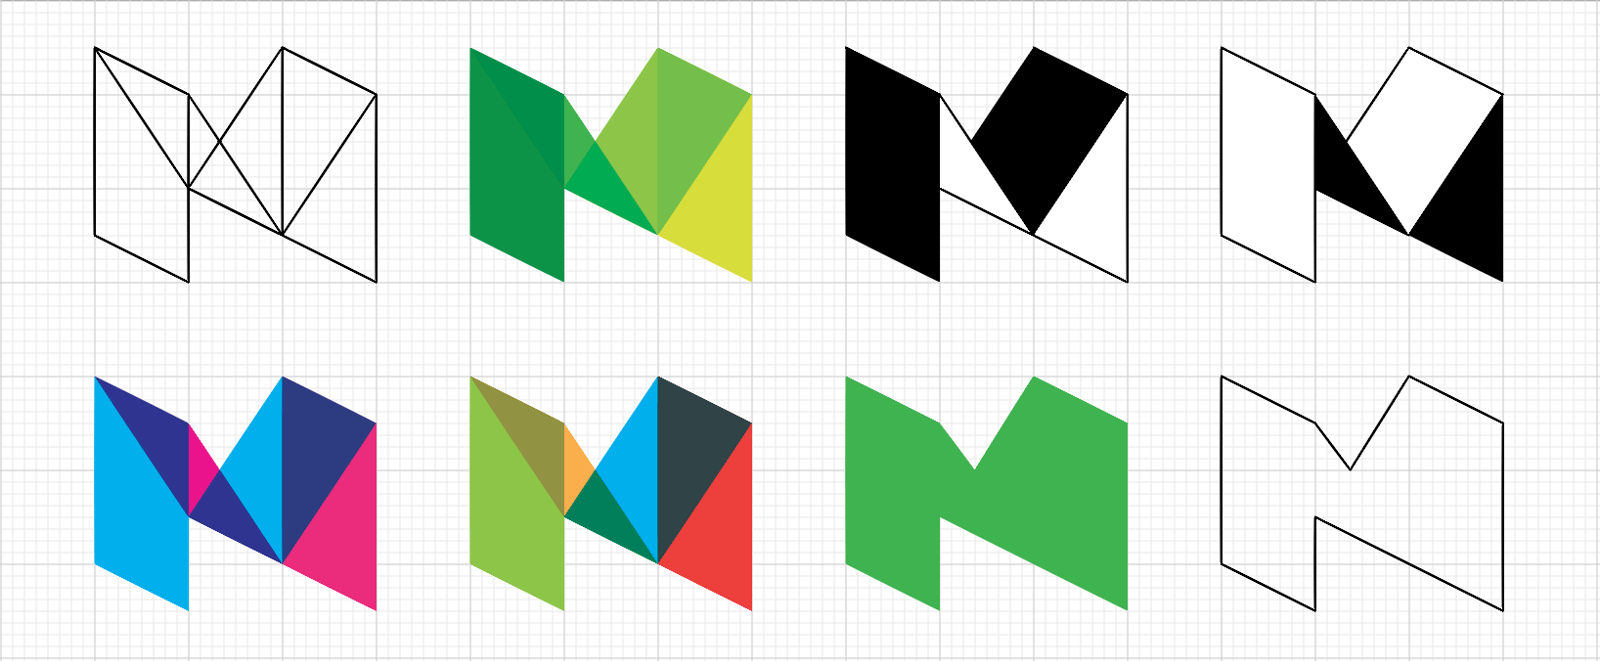 Medium Logo - The Story Behind Medium's New Logo [2015]